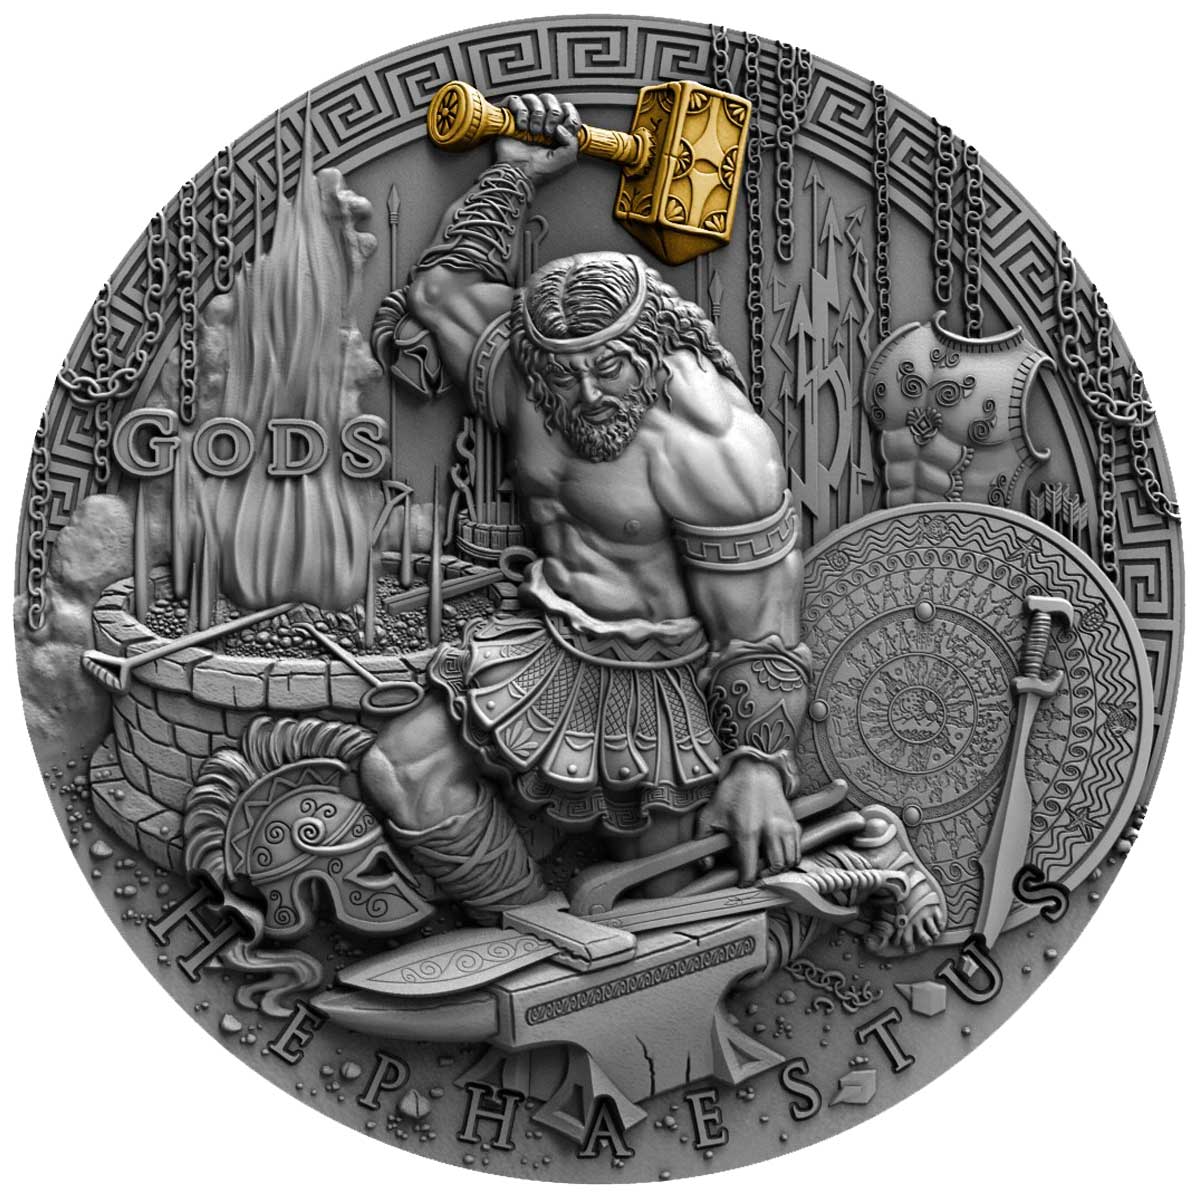 Niue 2019 – Gods – Hephaestus God of Blacksmiths – $2 silver coin 2 oz